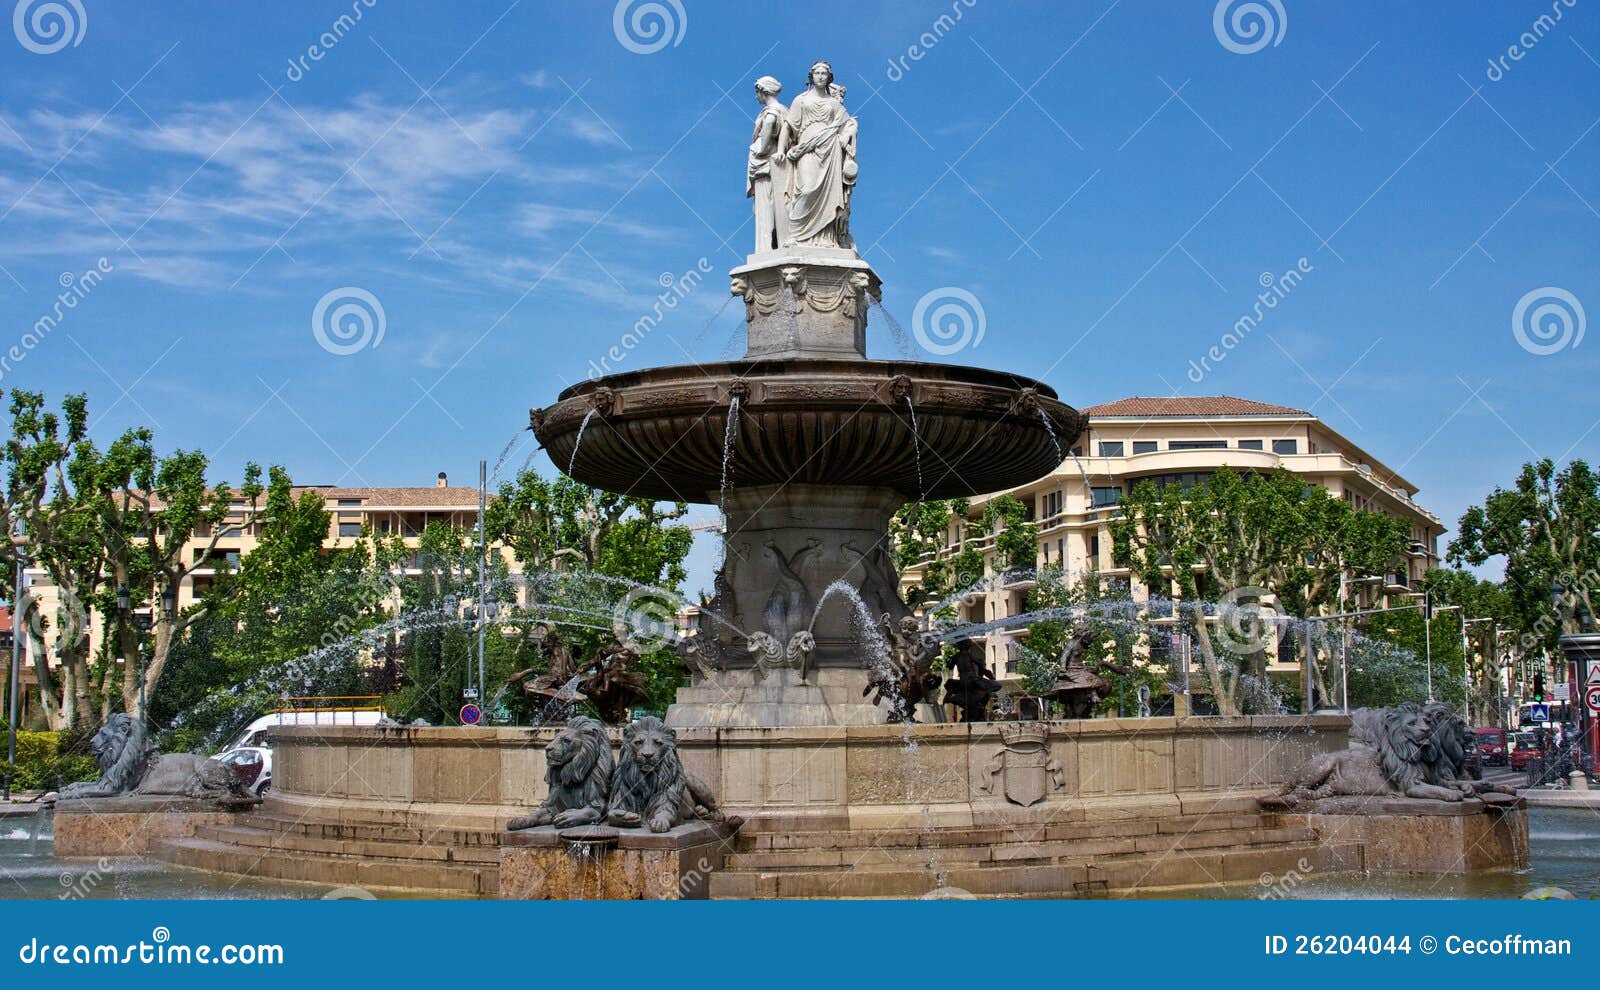 Fontaine de la Rotonde stock photo. Image of blue, city - 26204044